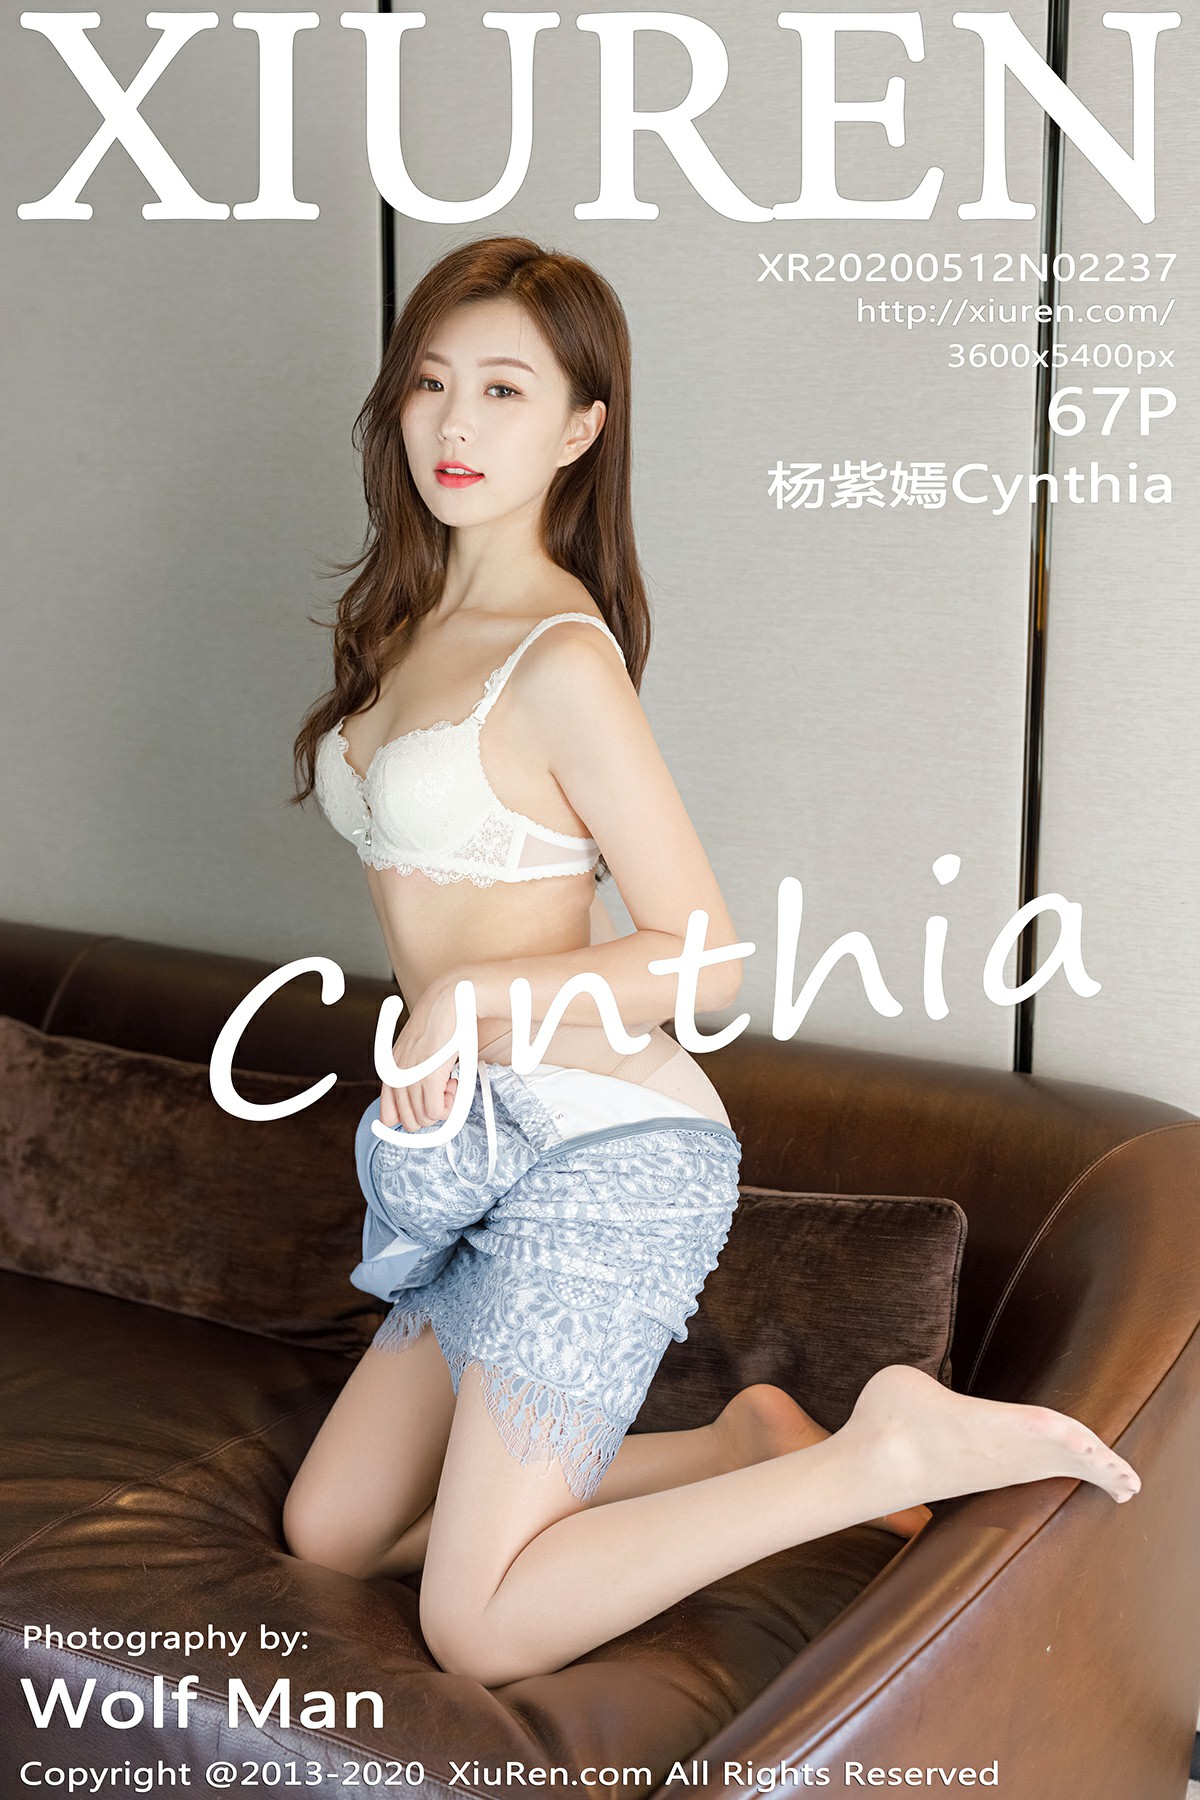 [XiuRen秀人网]2020.05.12 No.2237 杨紫嫣Cynthia